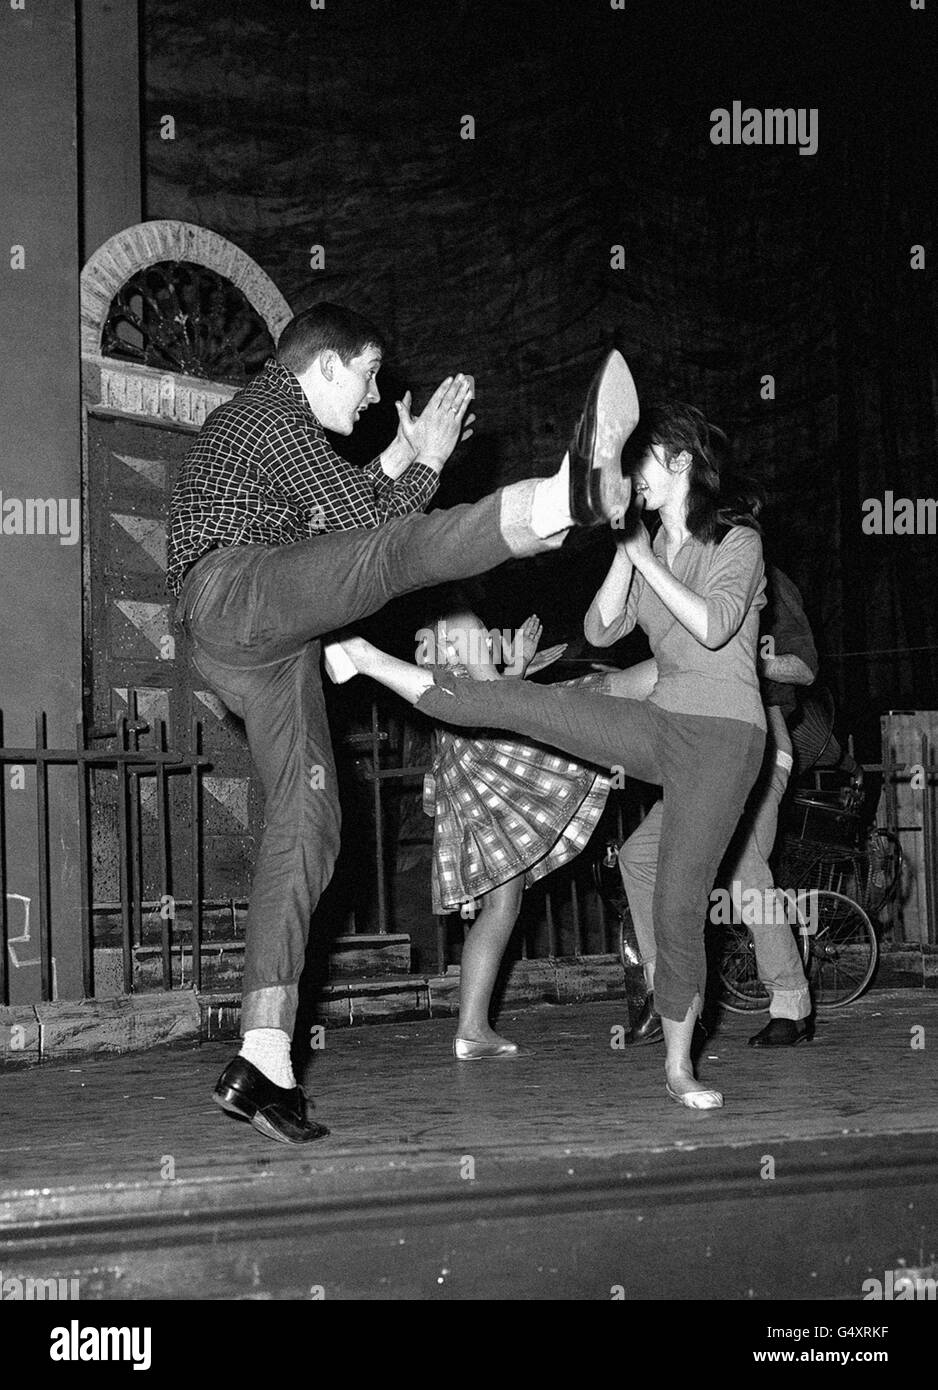 The Scatterin' - Garrick Theatre - London - 1962 Stock Photo